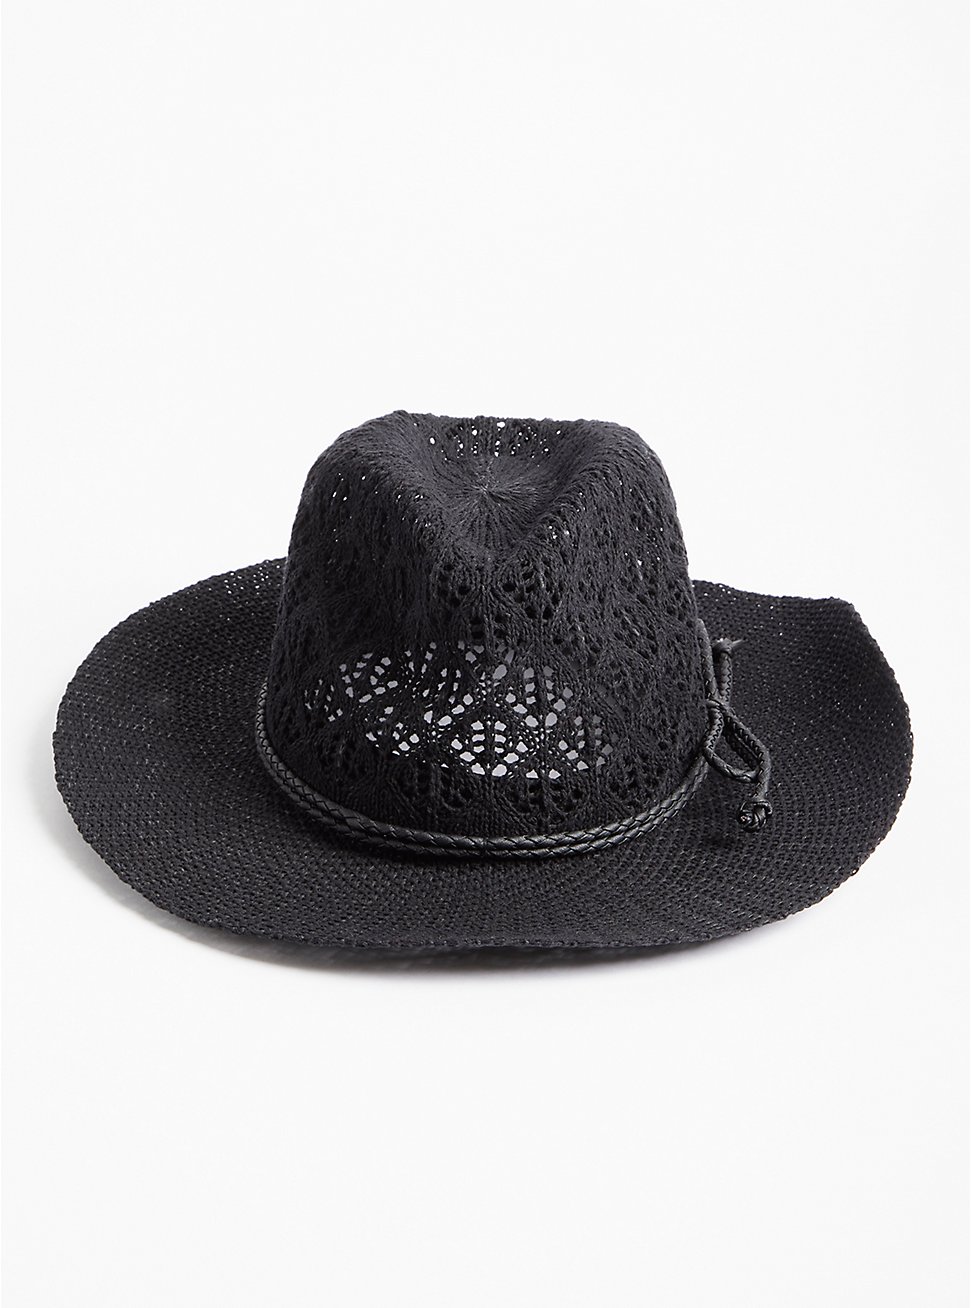 Plus Size Open Pattern Panama Hat - Black, BLACK, hi-res